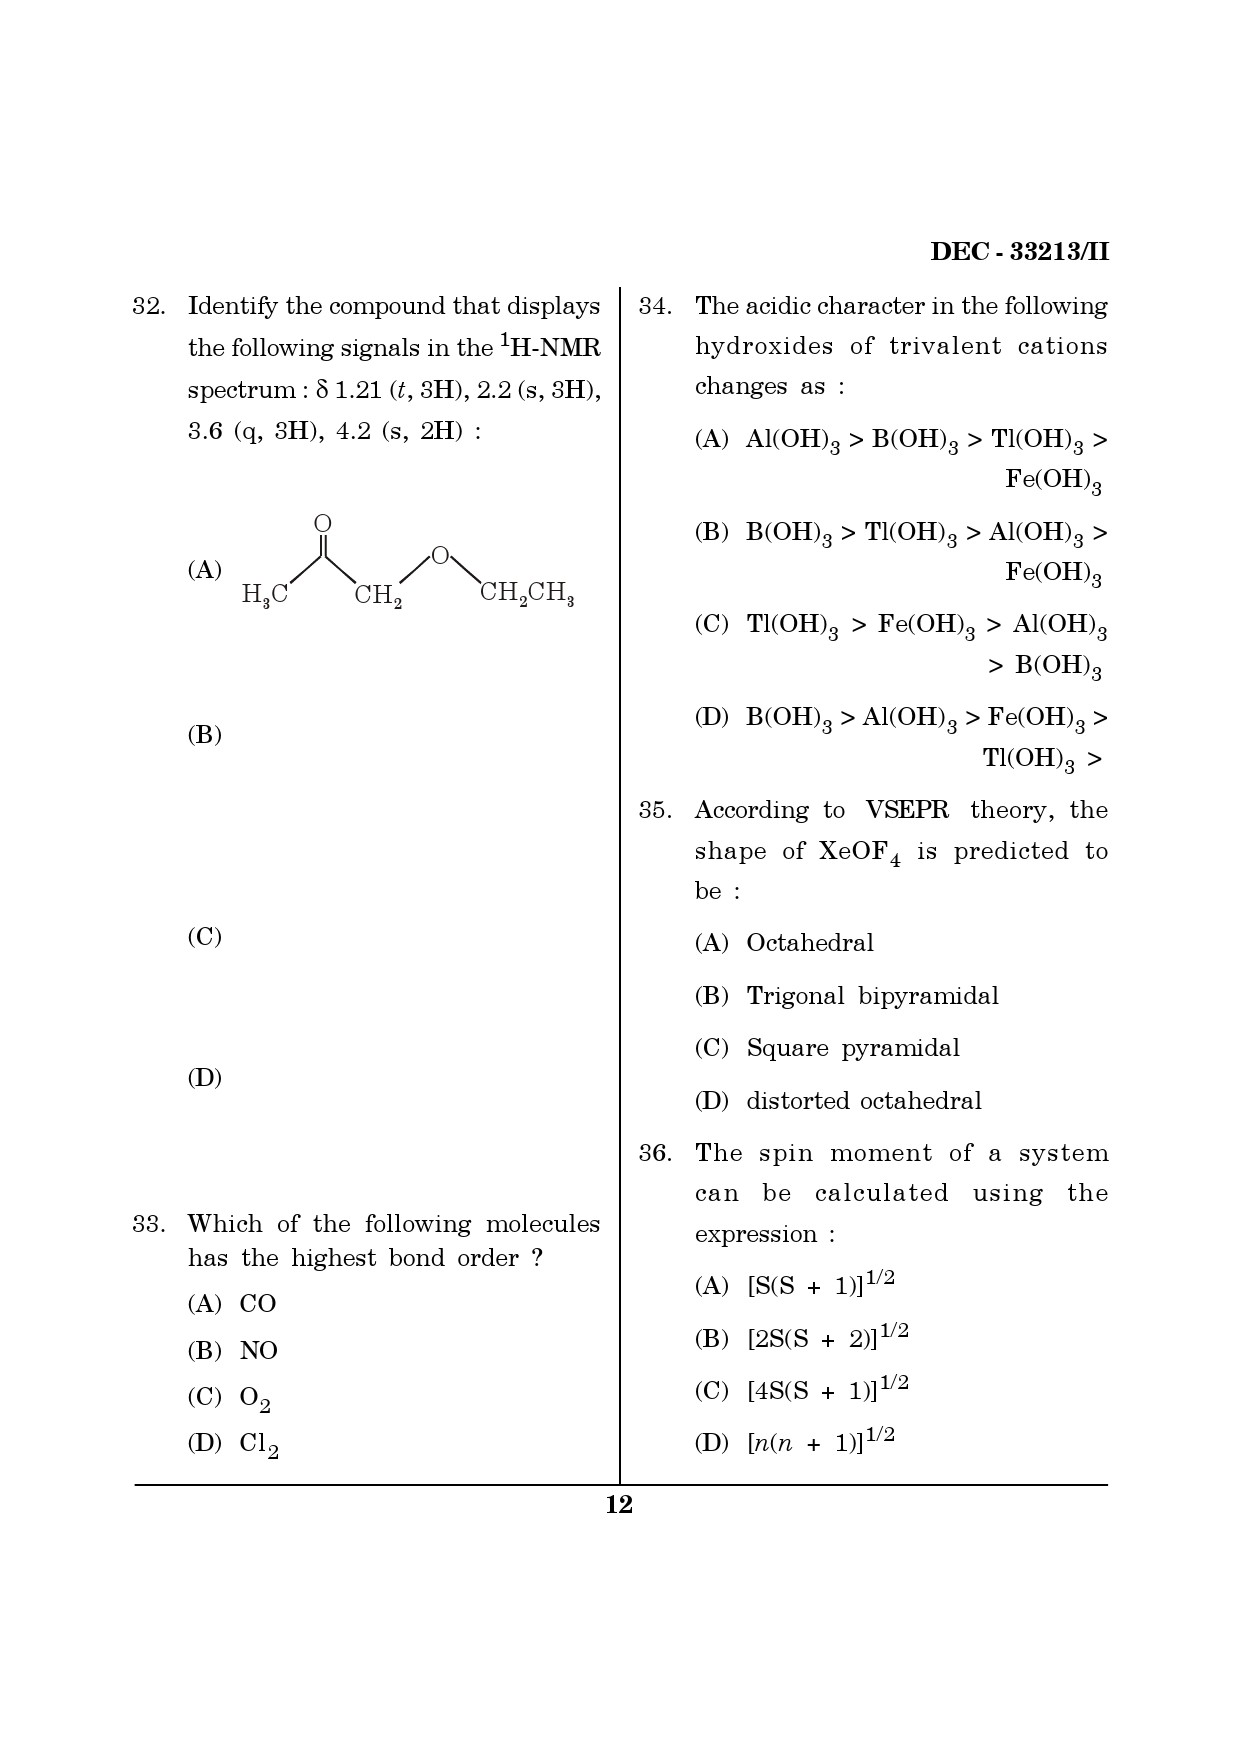 Maharashtra SET Chemical Sciences Question Paper II December 2013 11